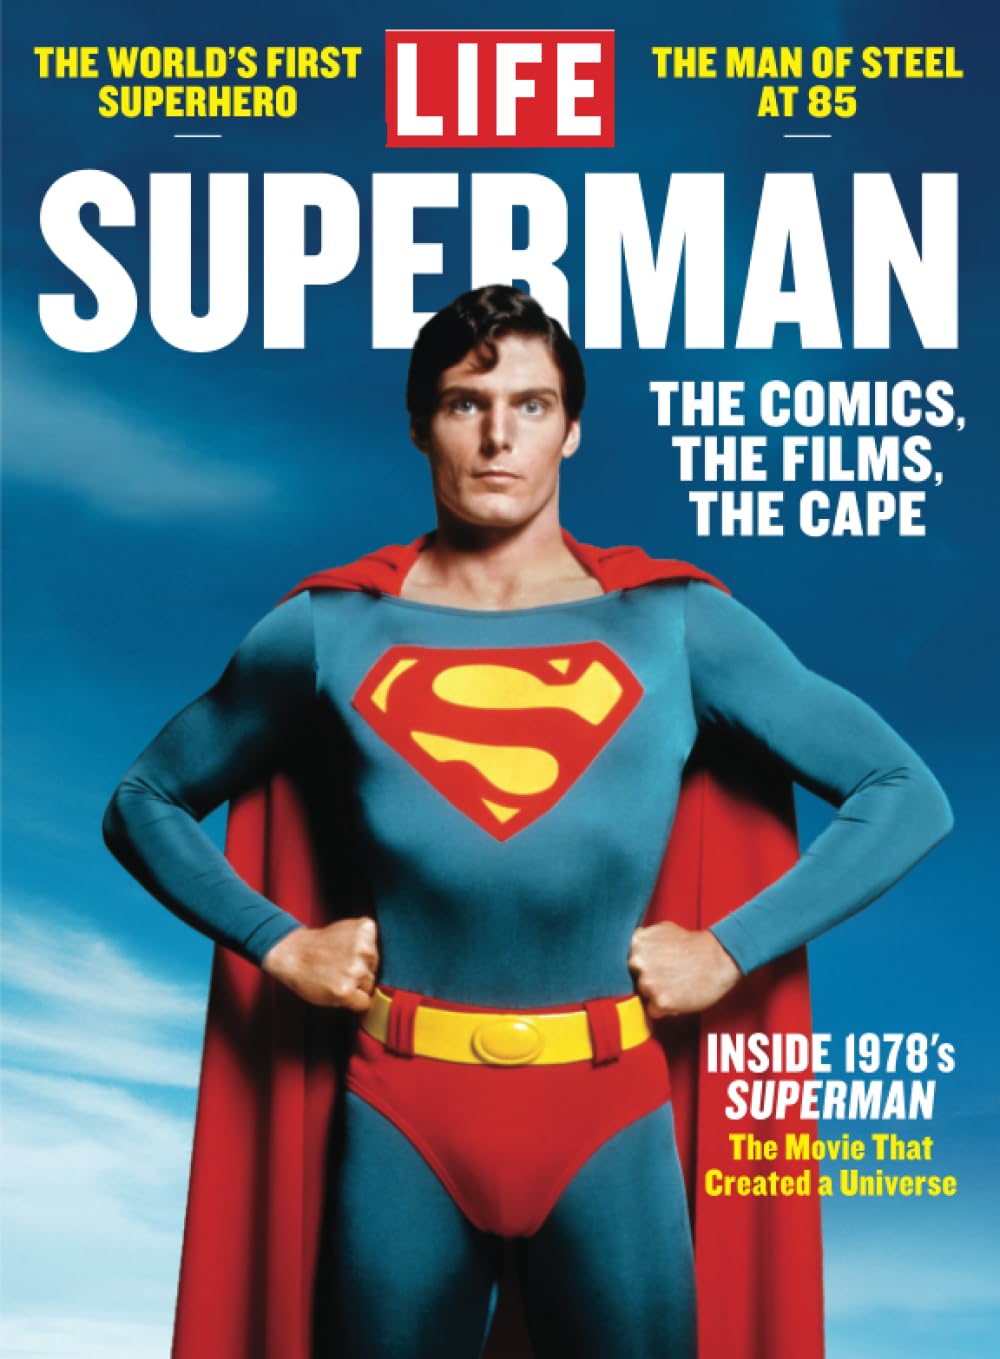 LIFE Magazine Celebrates Superman's 85th Anniversary